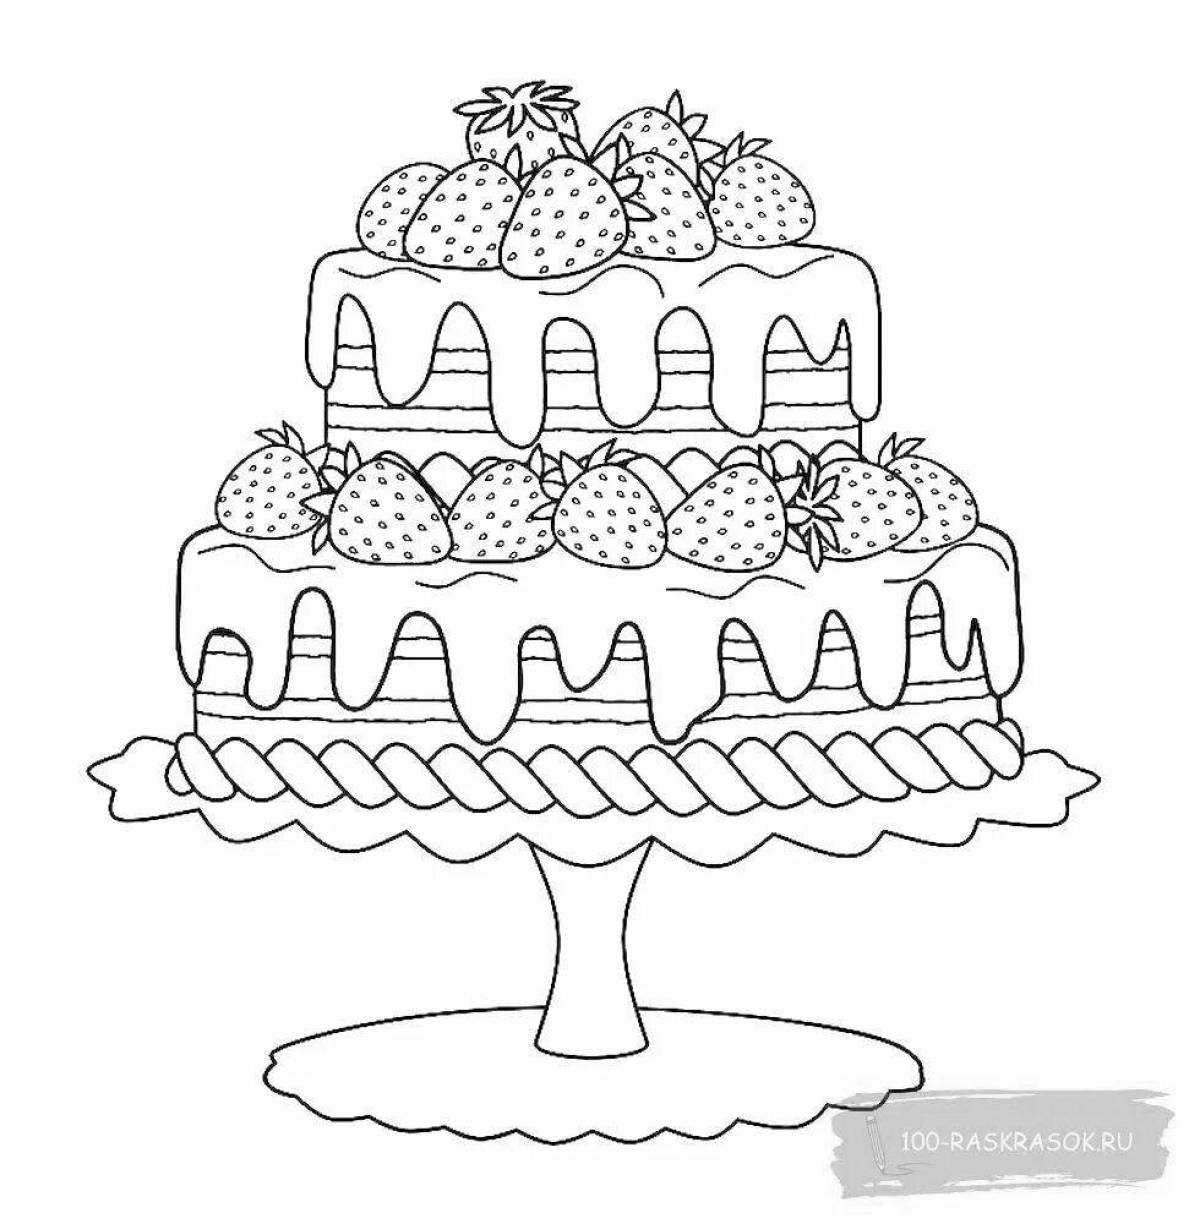 Fantastic beautiful cake coloring page